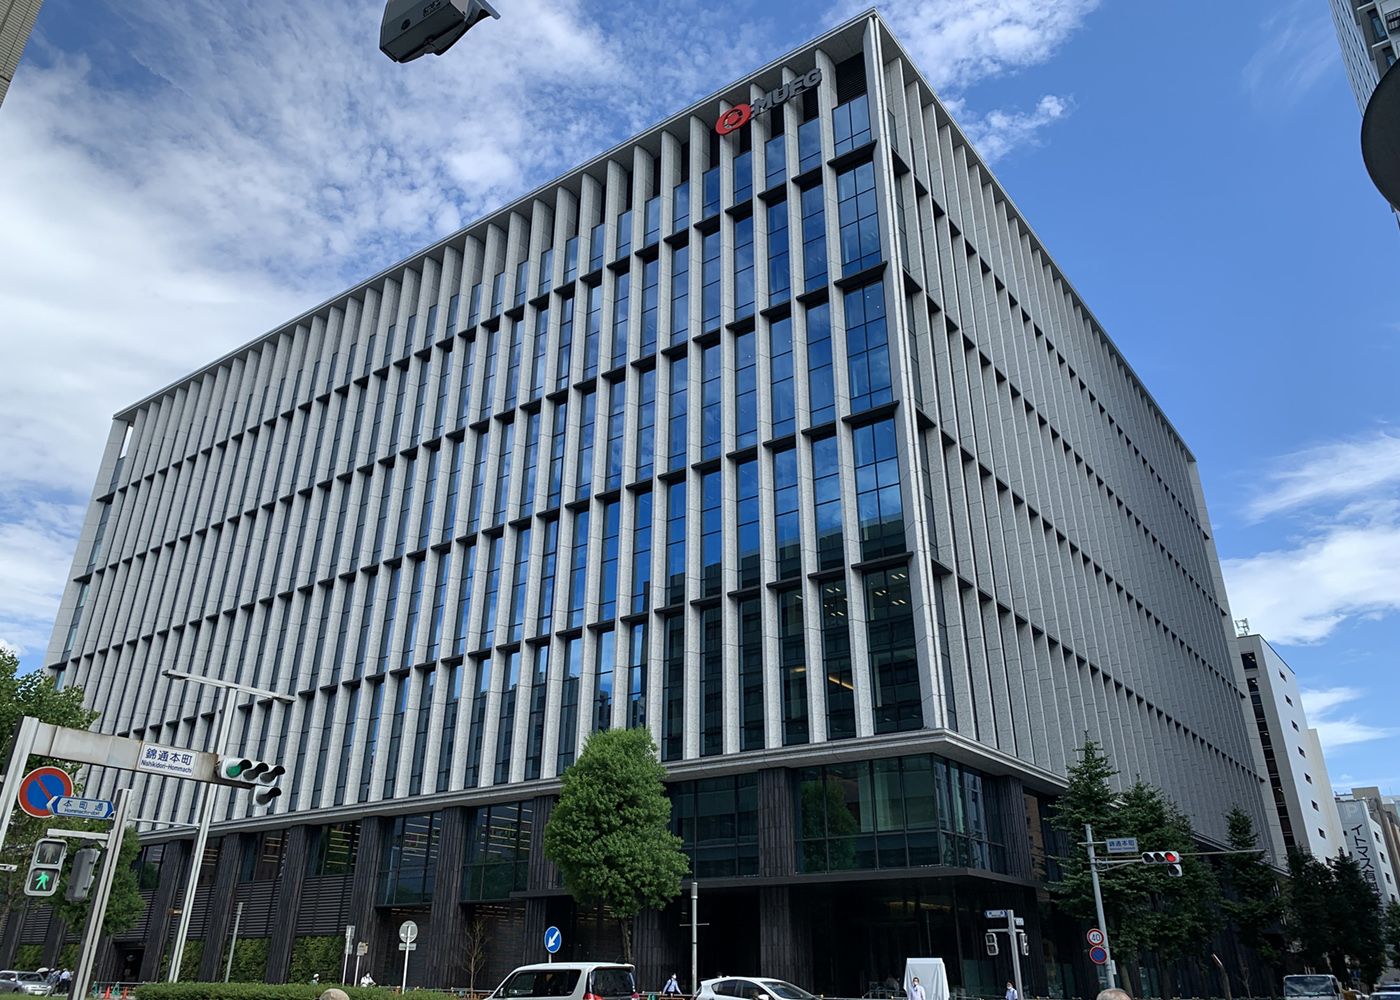 三菱UFJ銀行 名古屋ビル